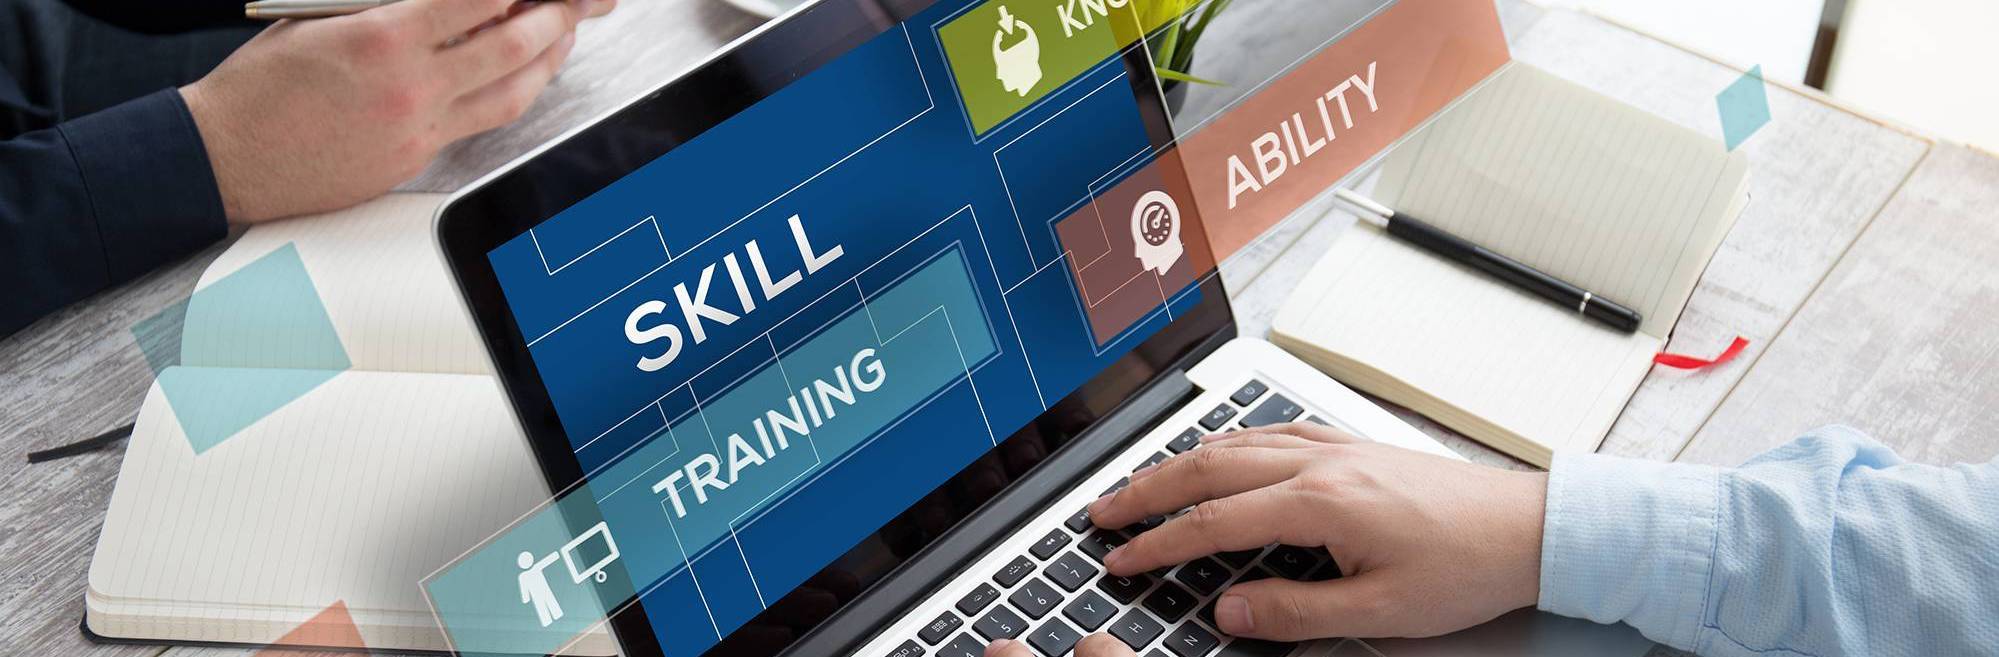 Skills, Knowledge, Training & Ability displayed on laptop